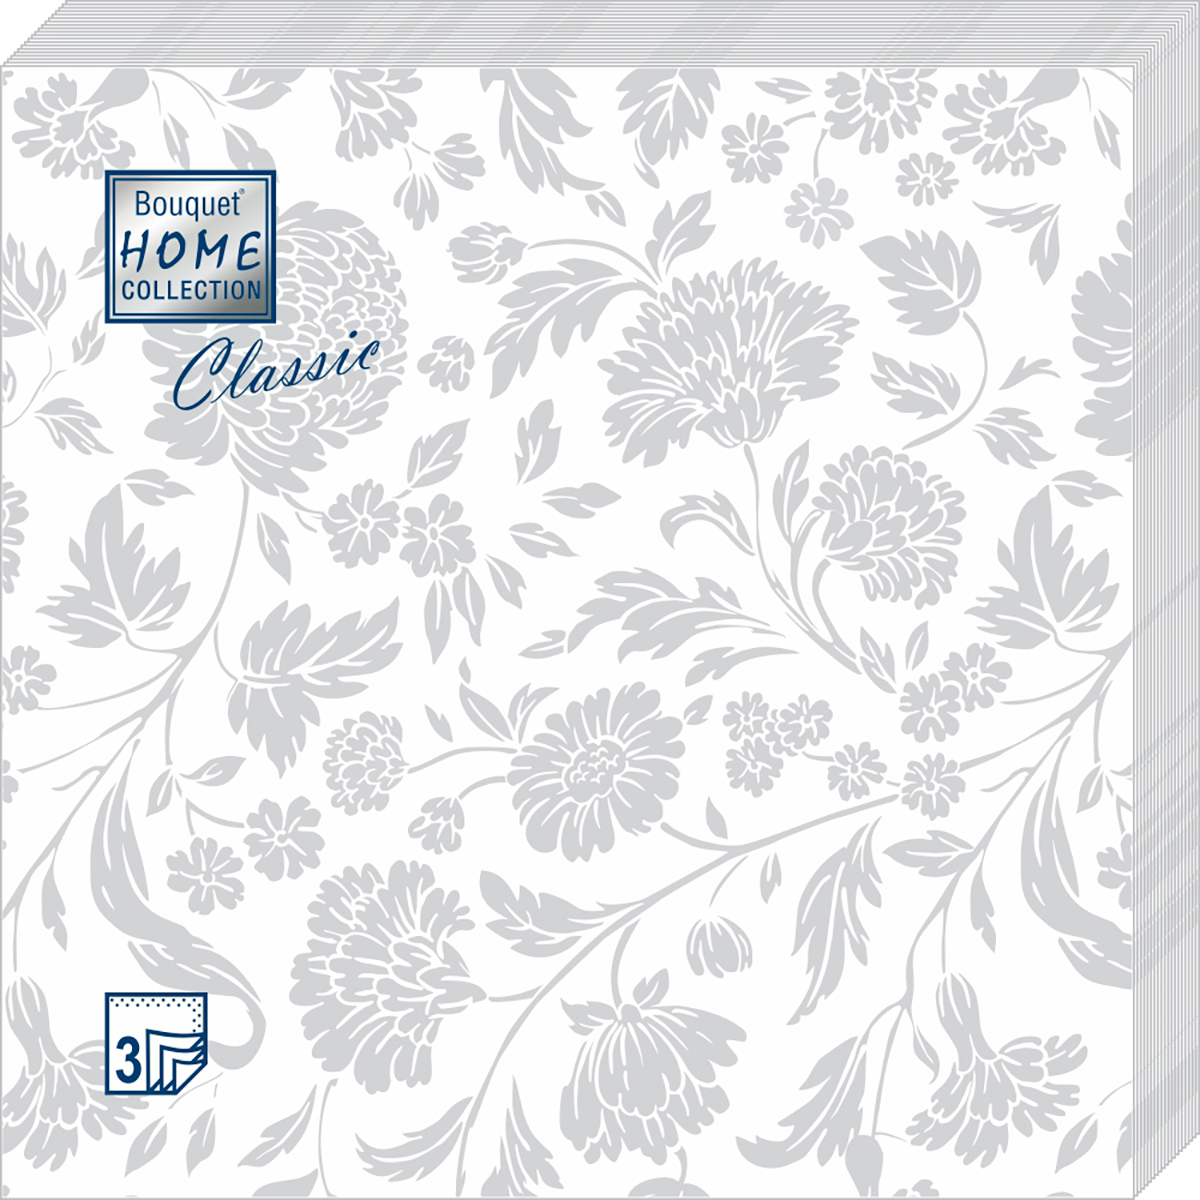 Салфетки Home collect classic бумажные серебро на белом 3сл 20л